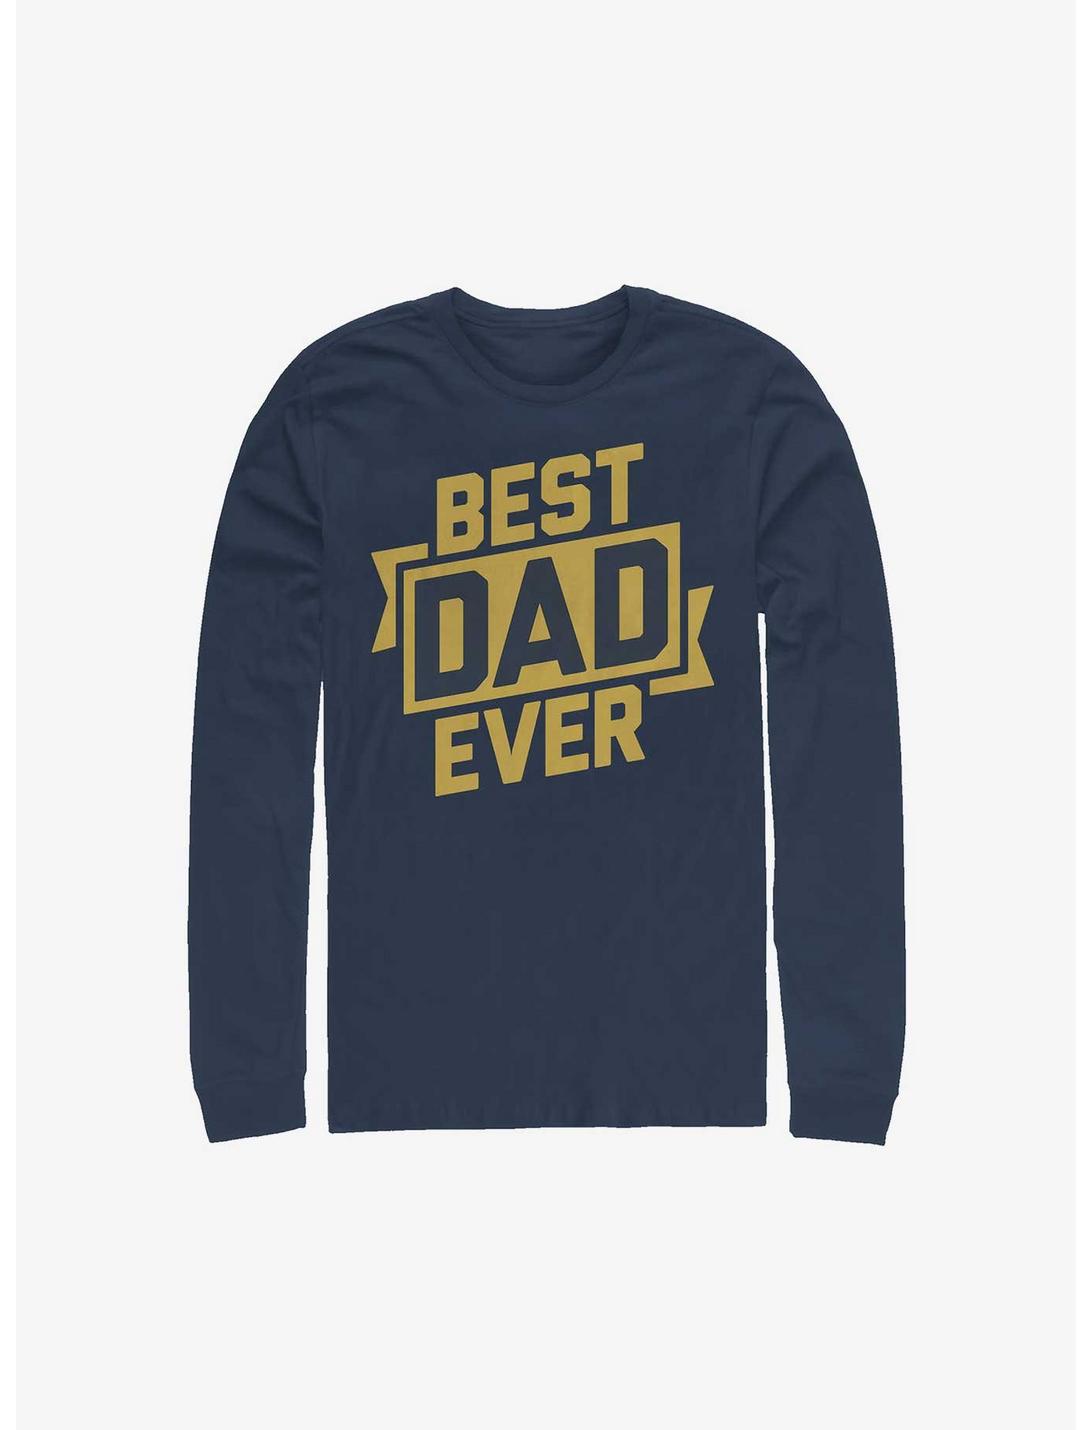 Best Dad Ever Long-Sleeve T-Shirt, NAVY, hi-res